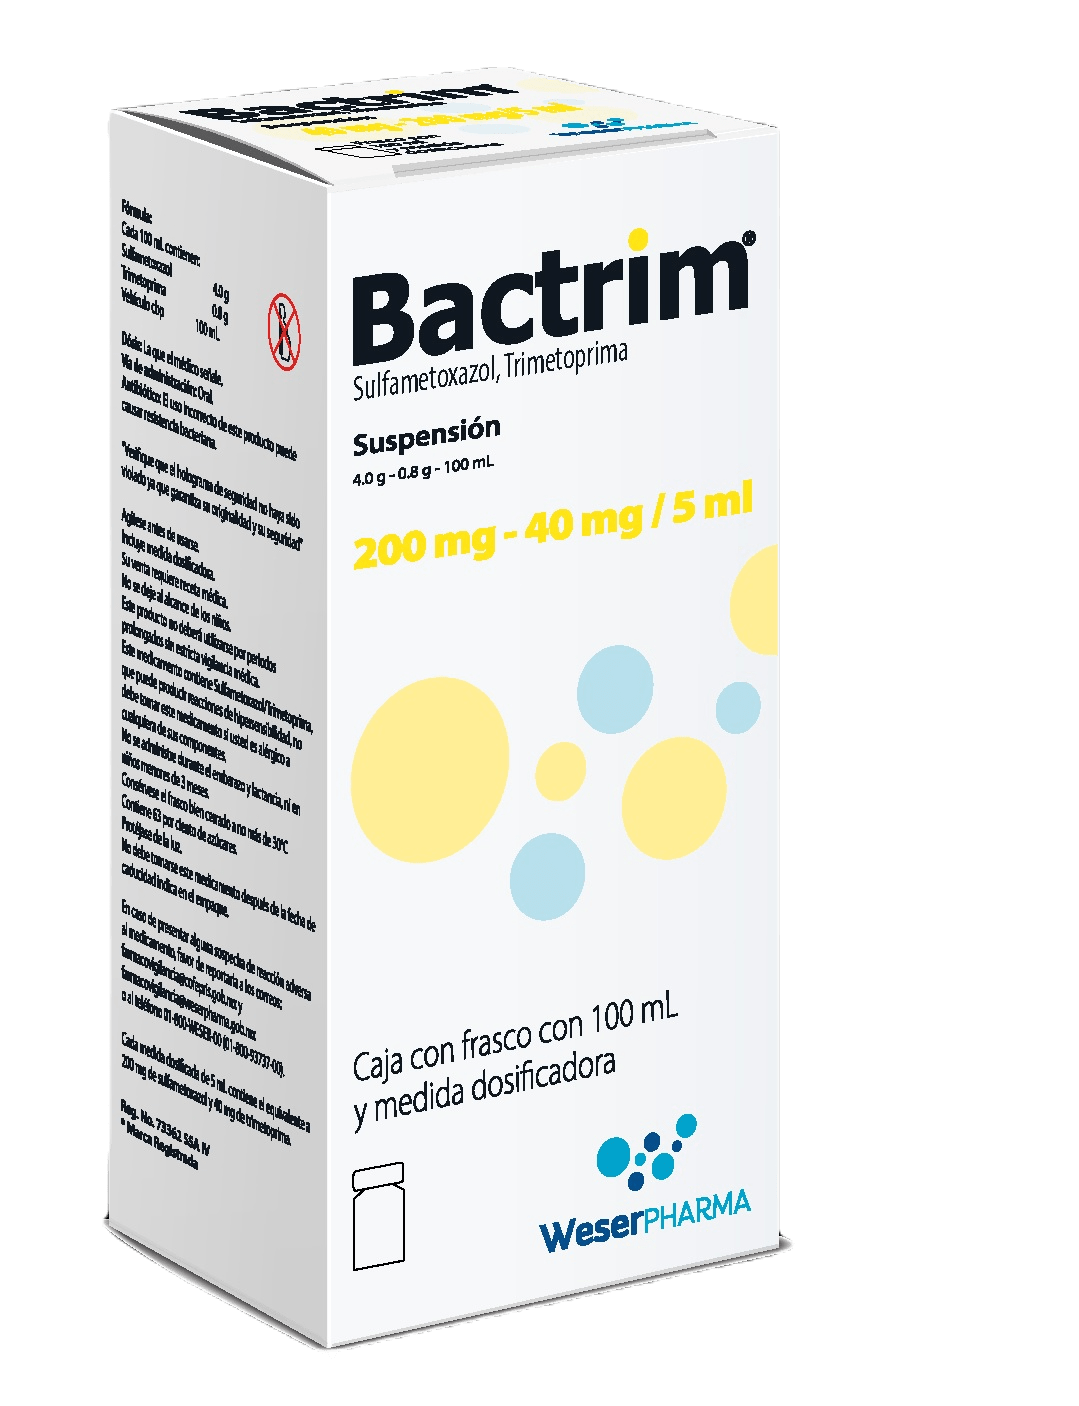 Bactrim Suspension 200 mg / 40 mg / 5 mL Frasco con 100 mL - Farmacias Klyns